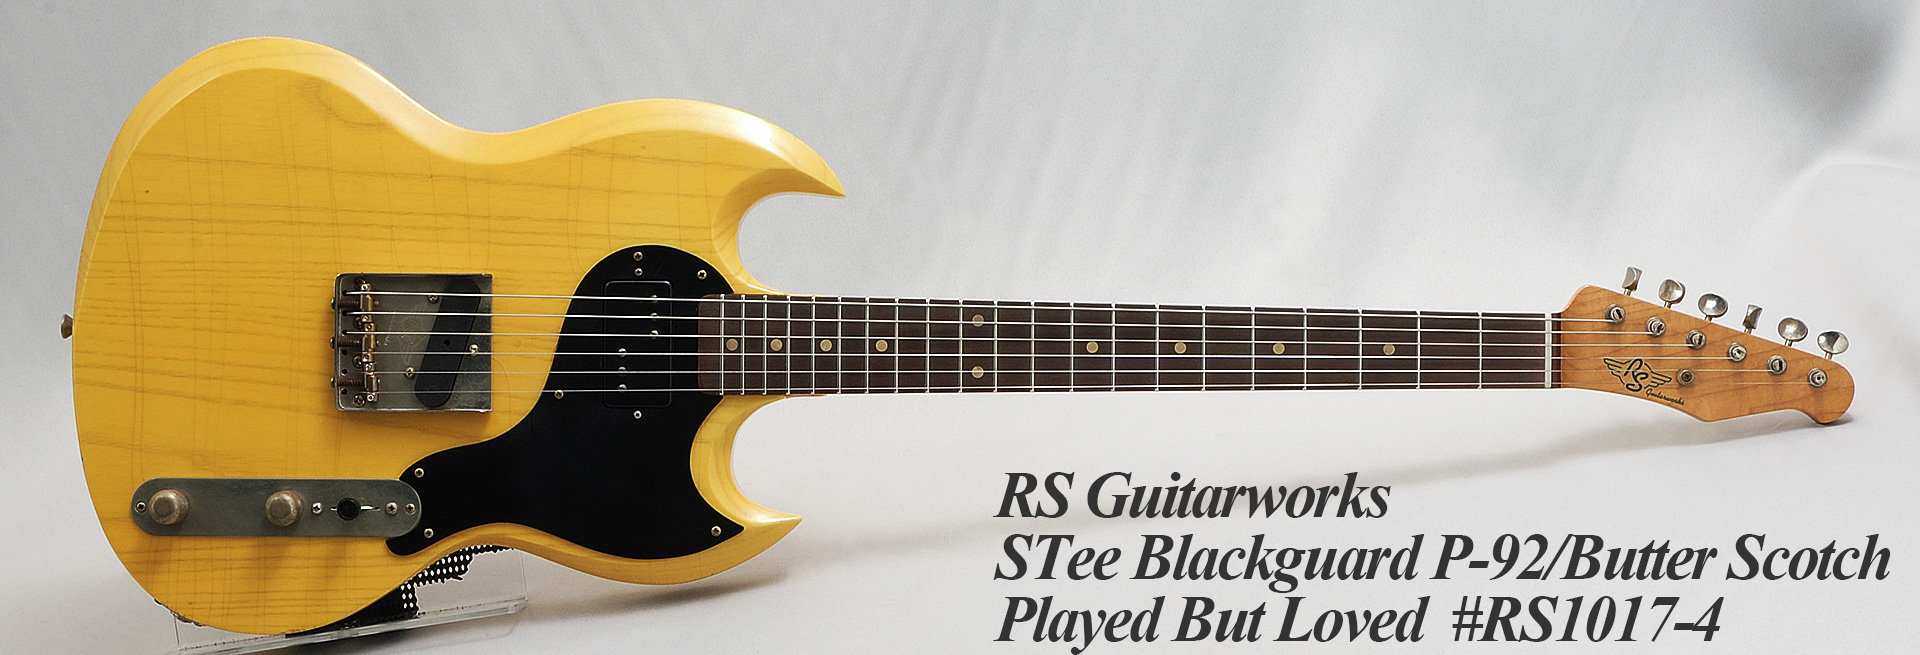 RS Guitarworks STee Blackguard P-92/KATALOX/Butter Scotch/Played